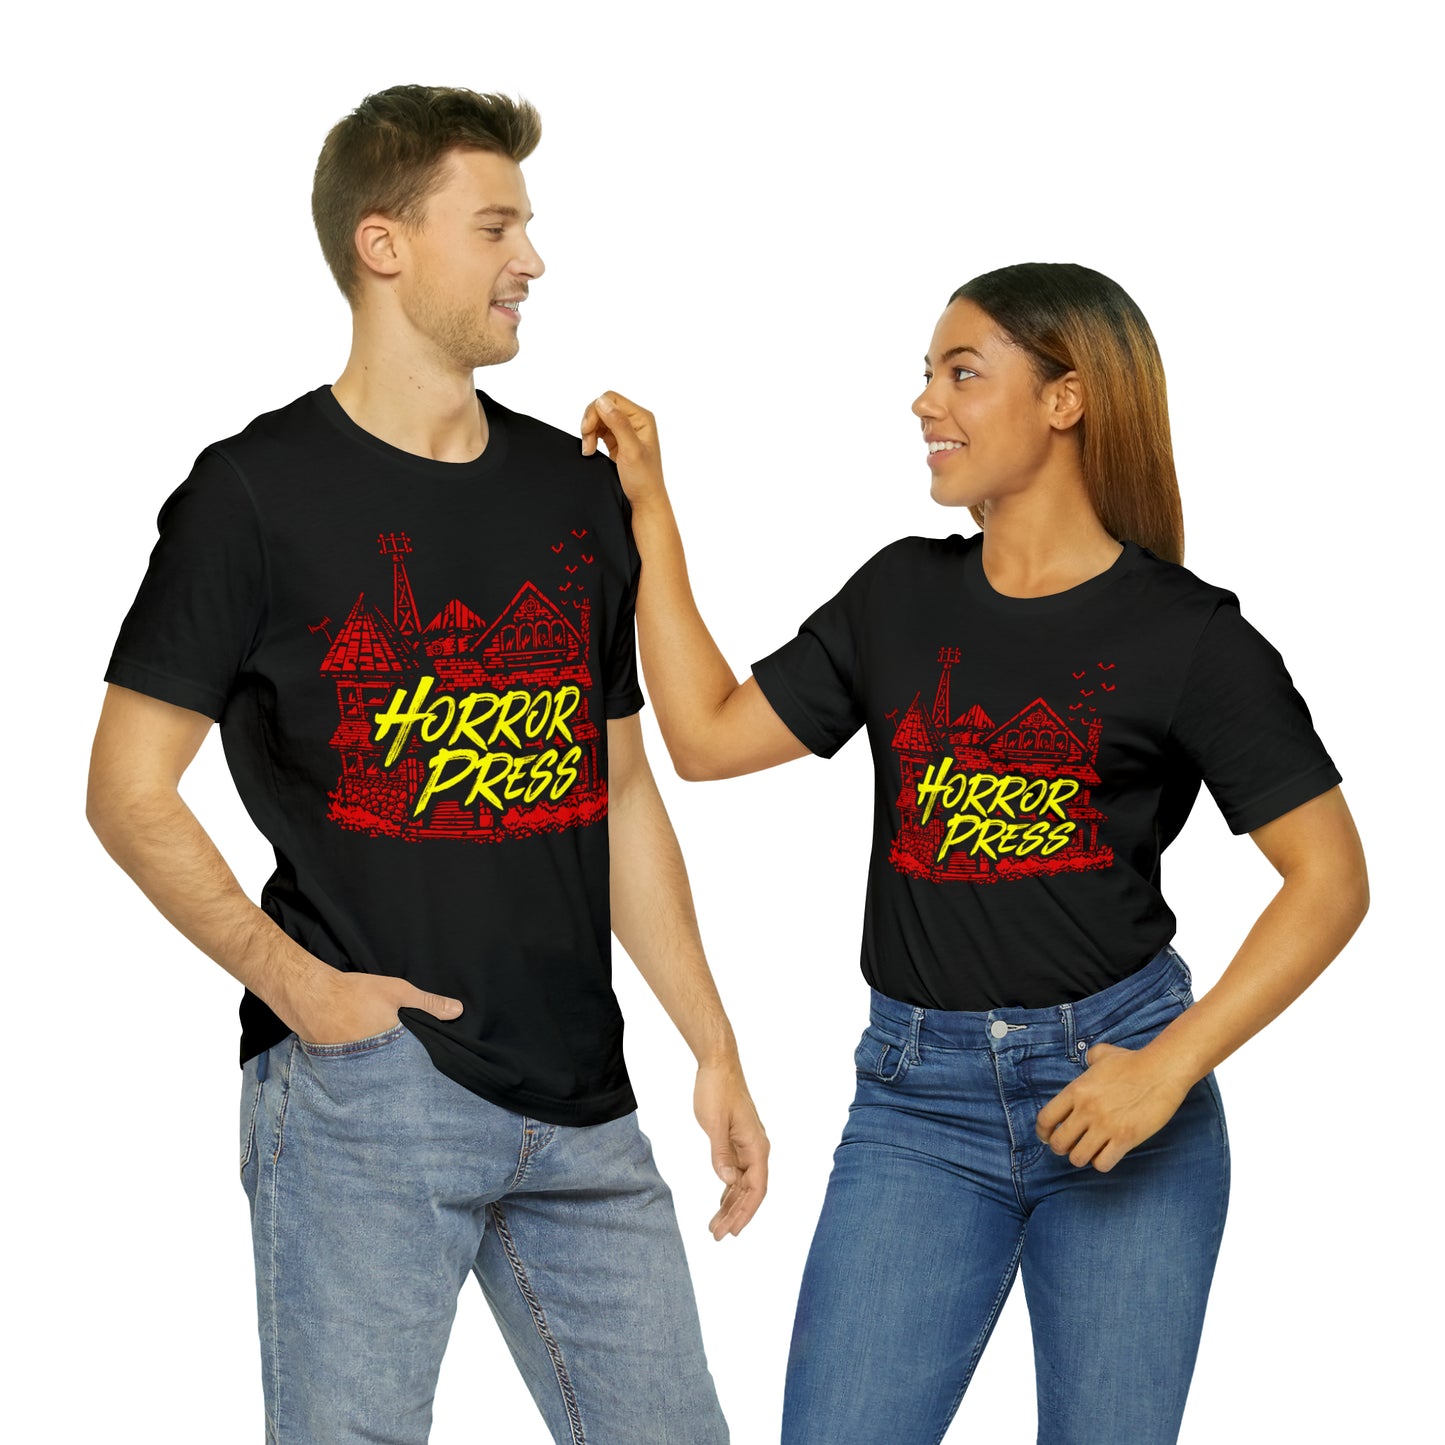 Official Horror Press T-Shirt - Horror Press Unisex Tee - Horror Movie Fan Gift  - Horror Press Horror Fan Shirt - Scary Movie Fan Shirt - Horror Game Fan Tee - Red on Black T-Shirt